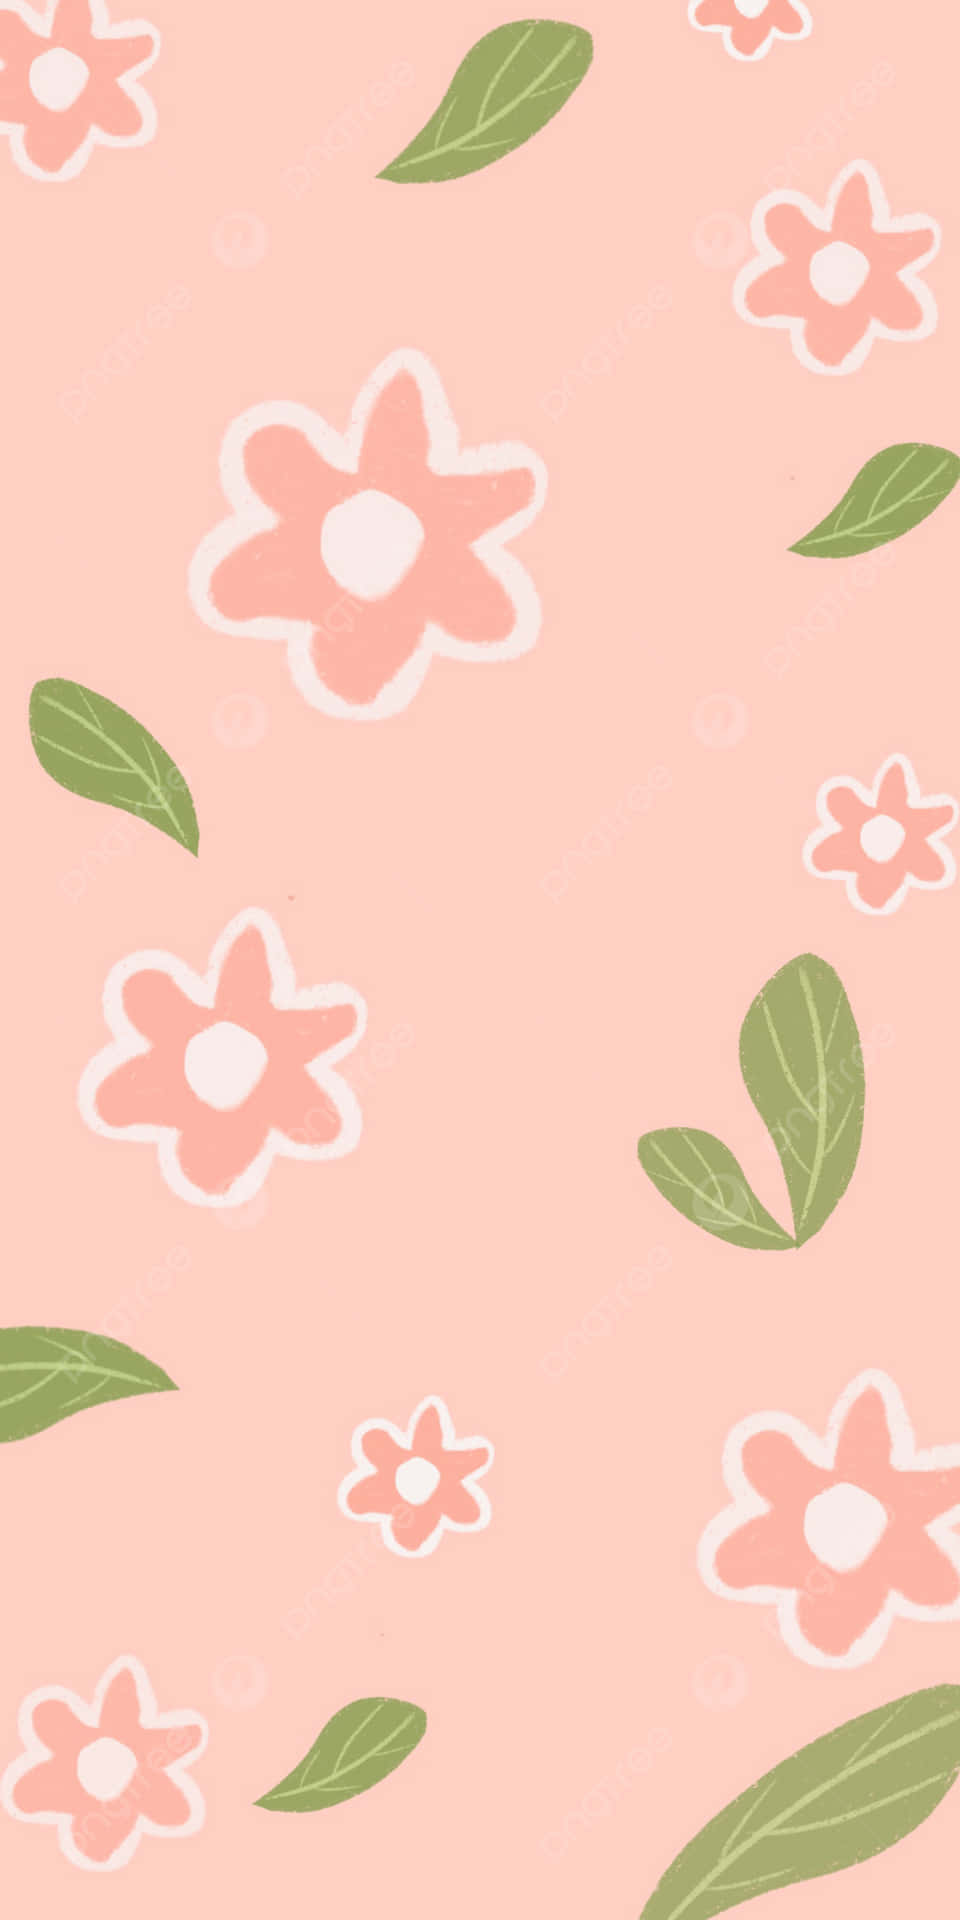 Imagencampo Floral Rosa En Plena Floración Fondo de pantalla